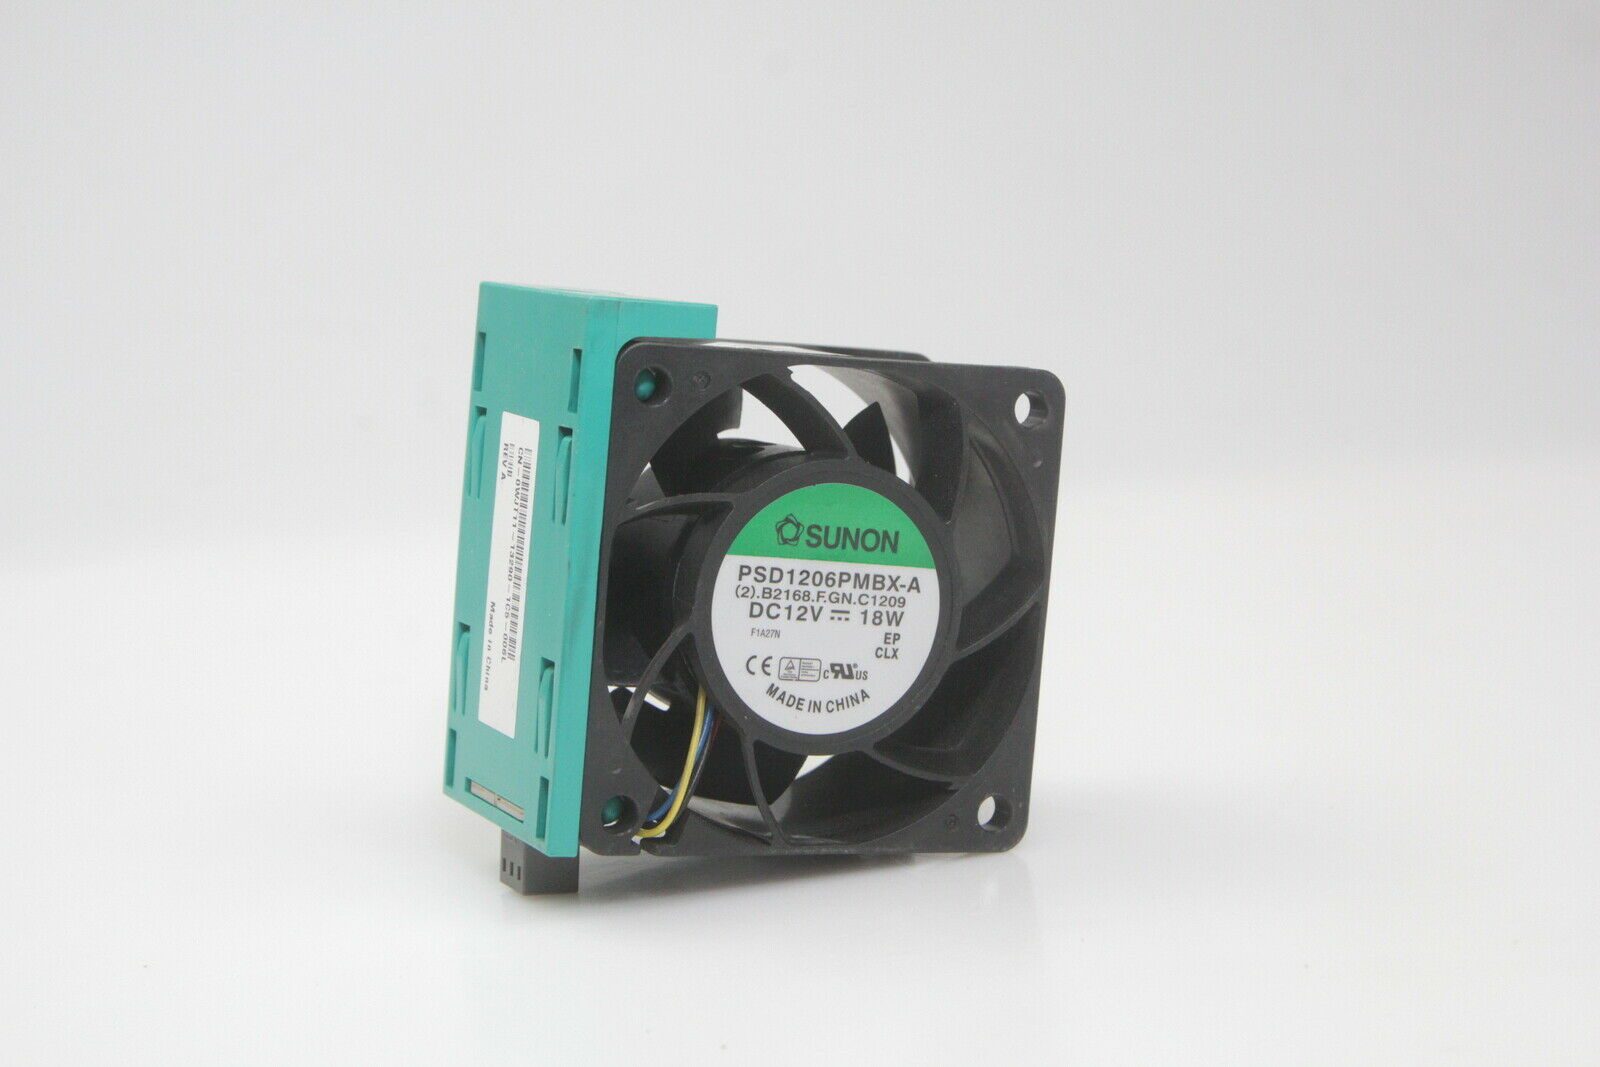 SUNON PSD1206PMBX-A Fan For HP Server DC12V 18W 530748-001